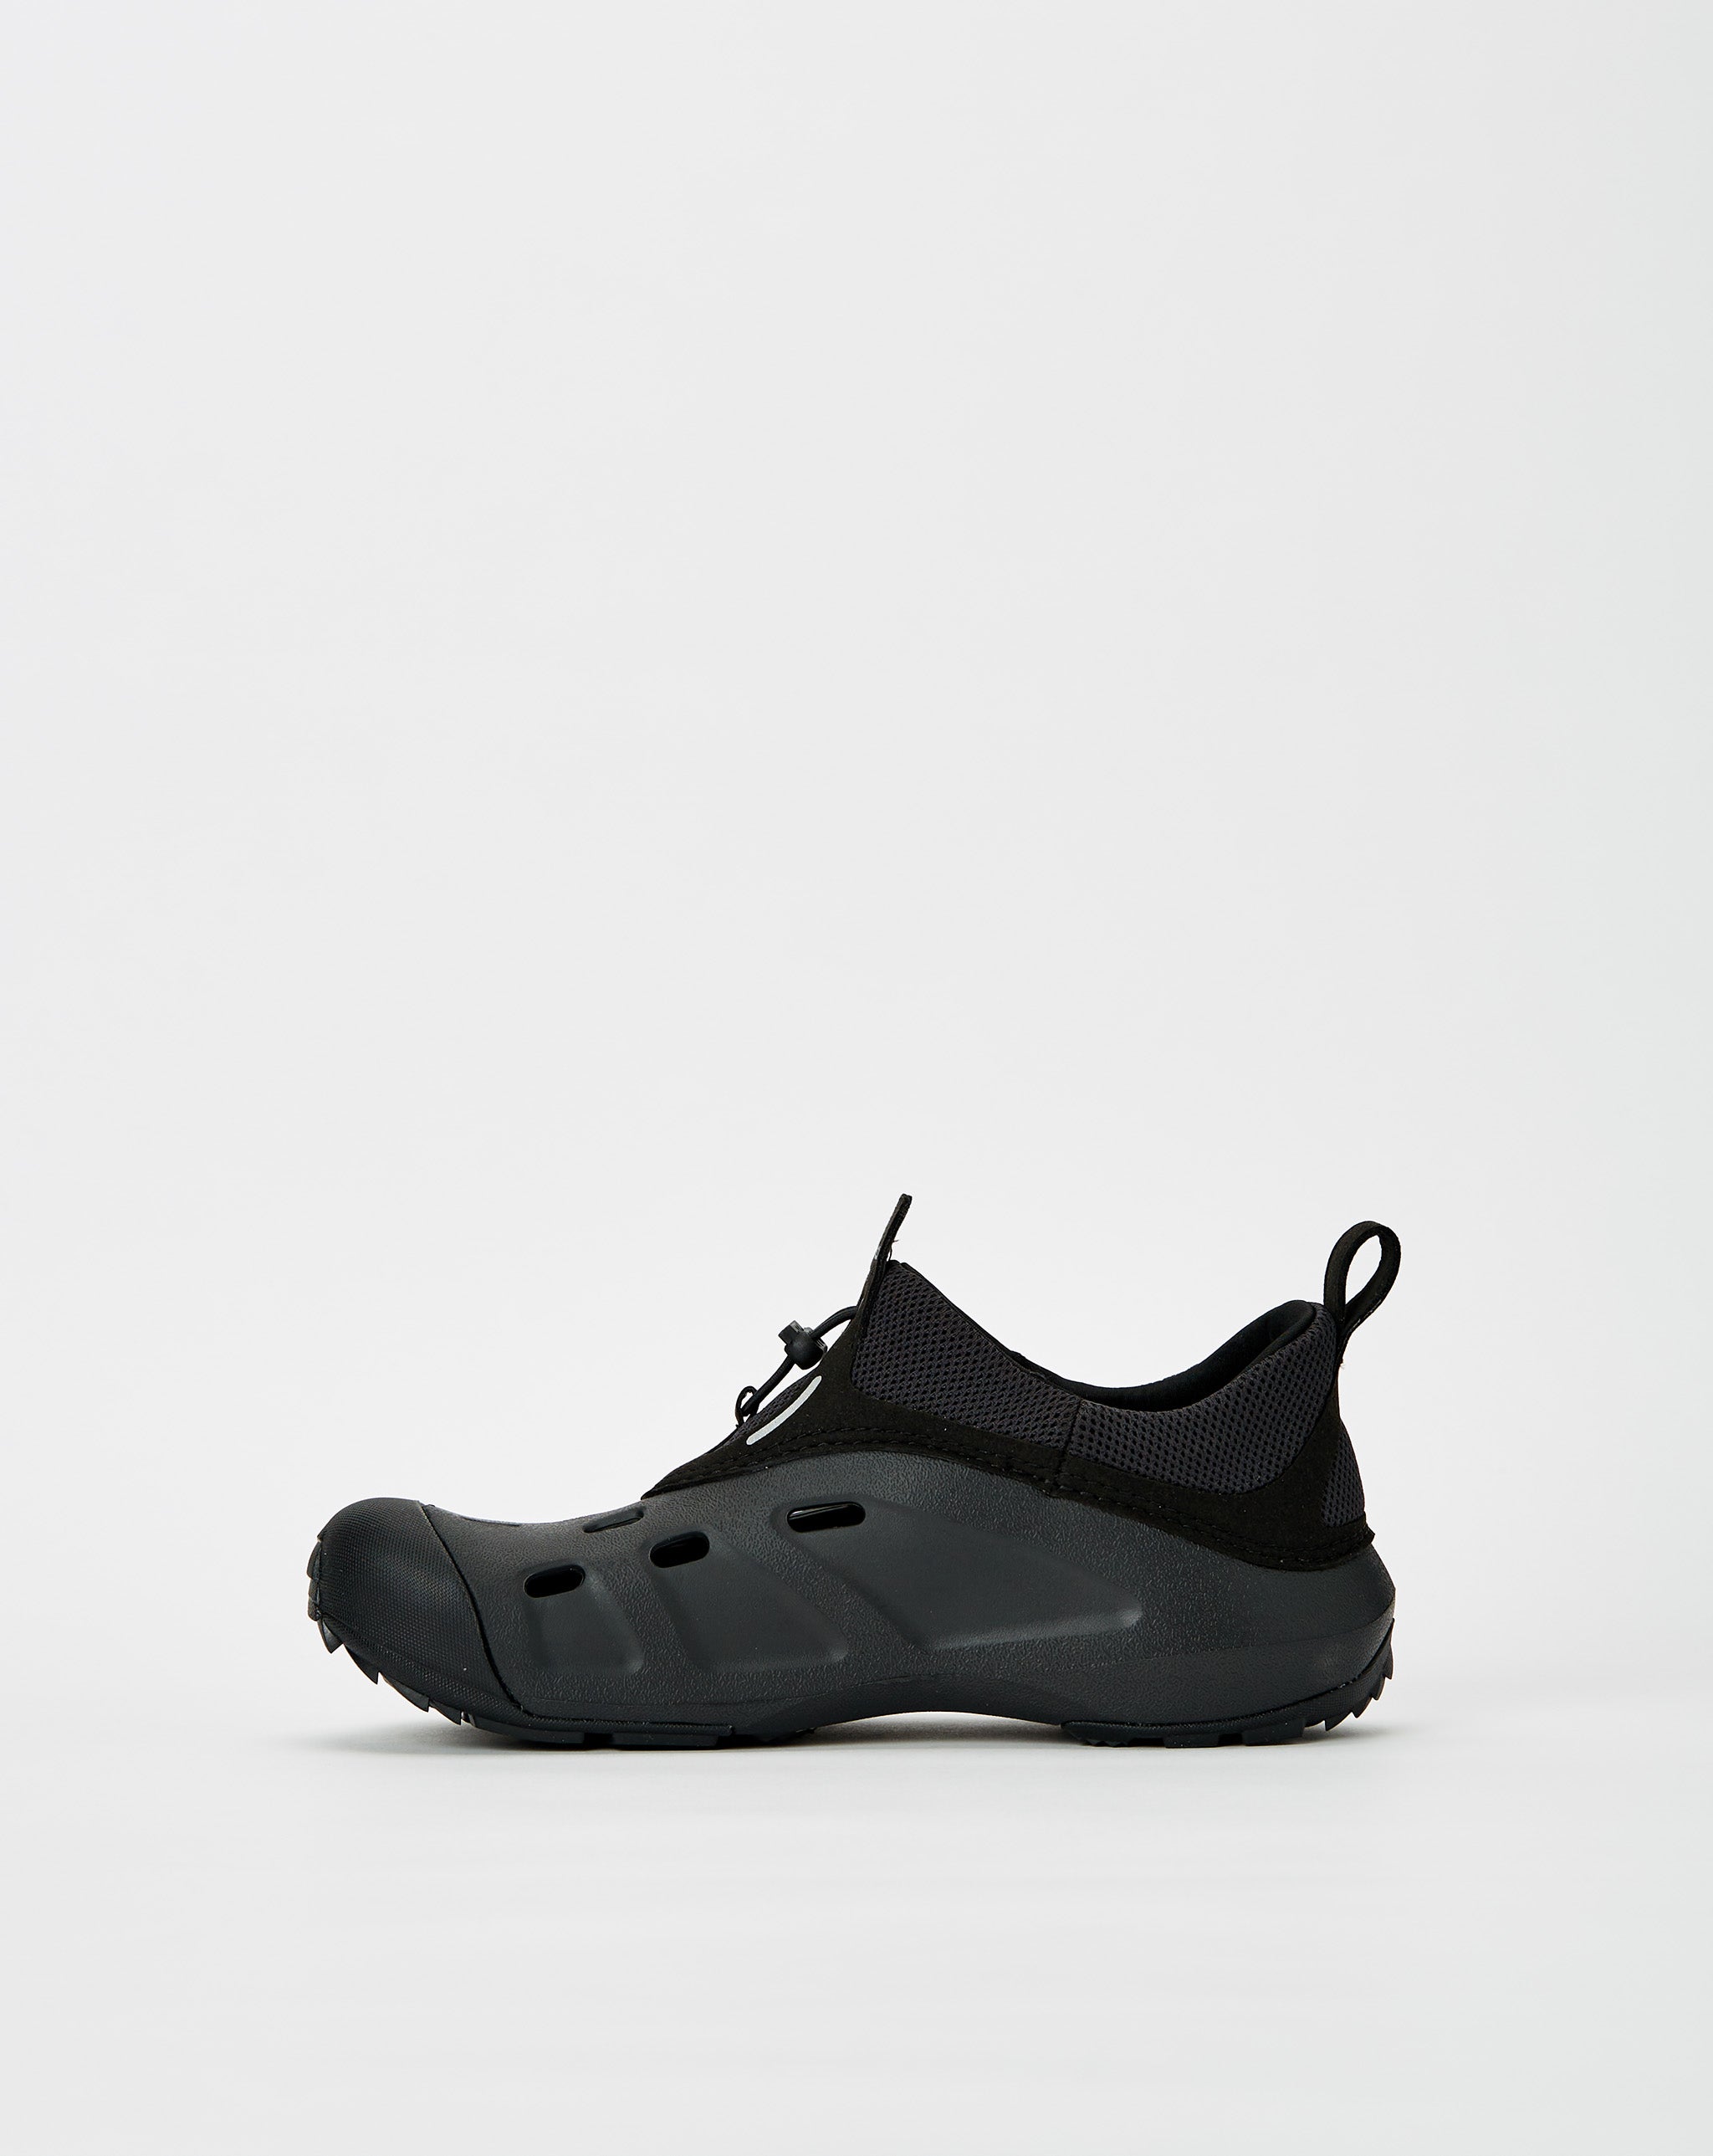 Crocs Nike Inspired Sneaker Storage Box  - Cheap Erlebniswelt-fliegenfischen Jordan outlet